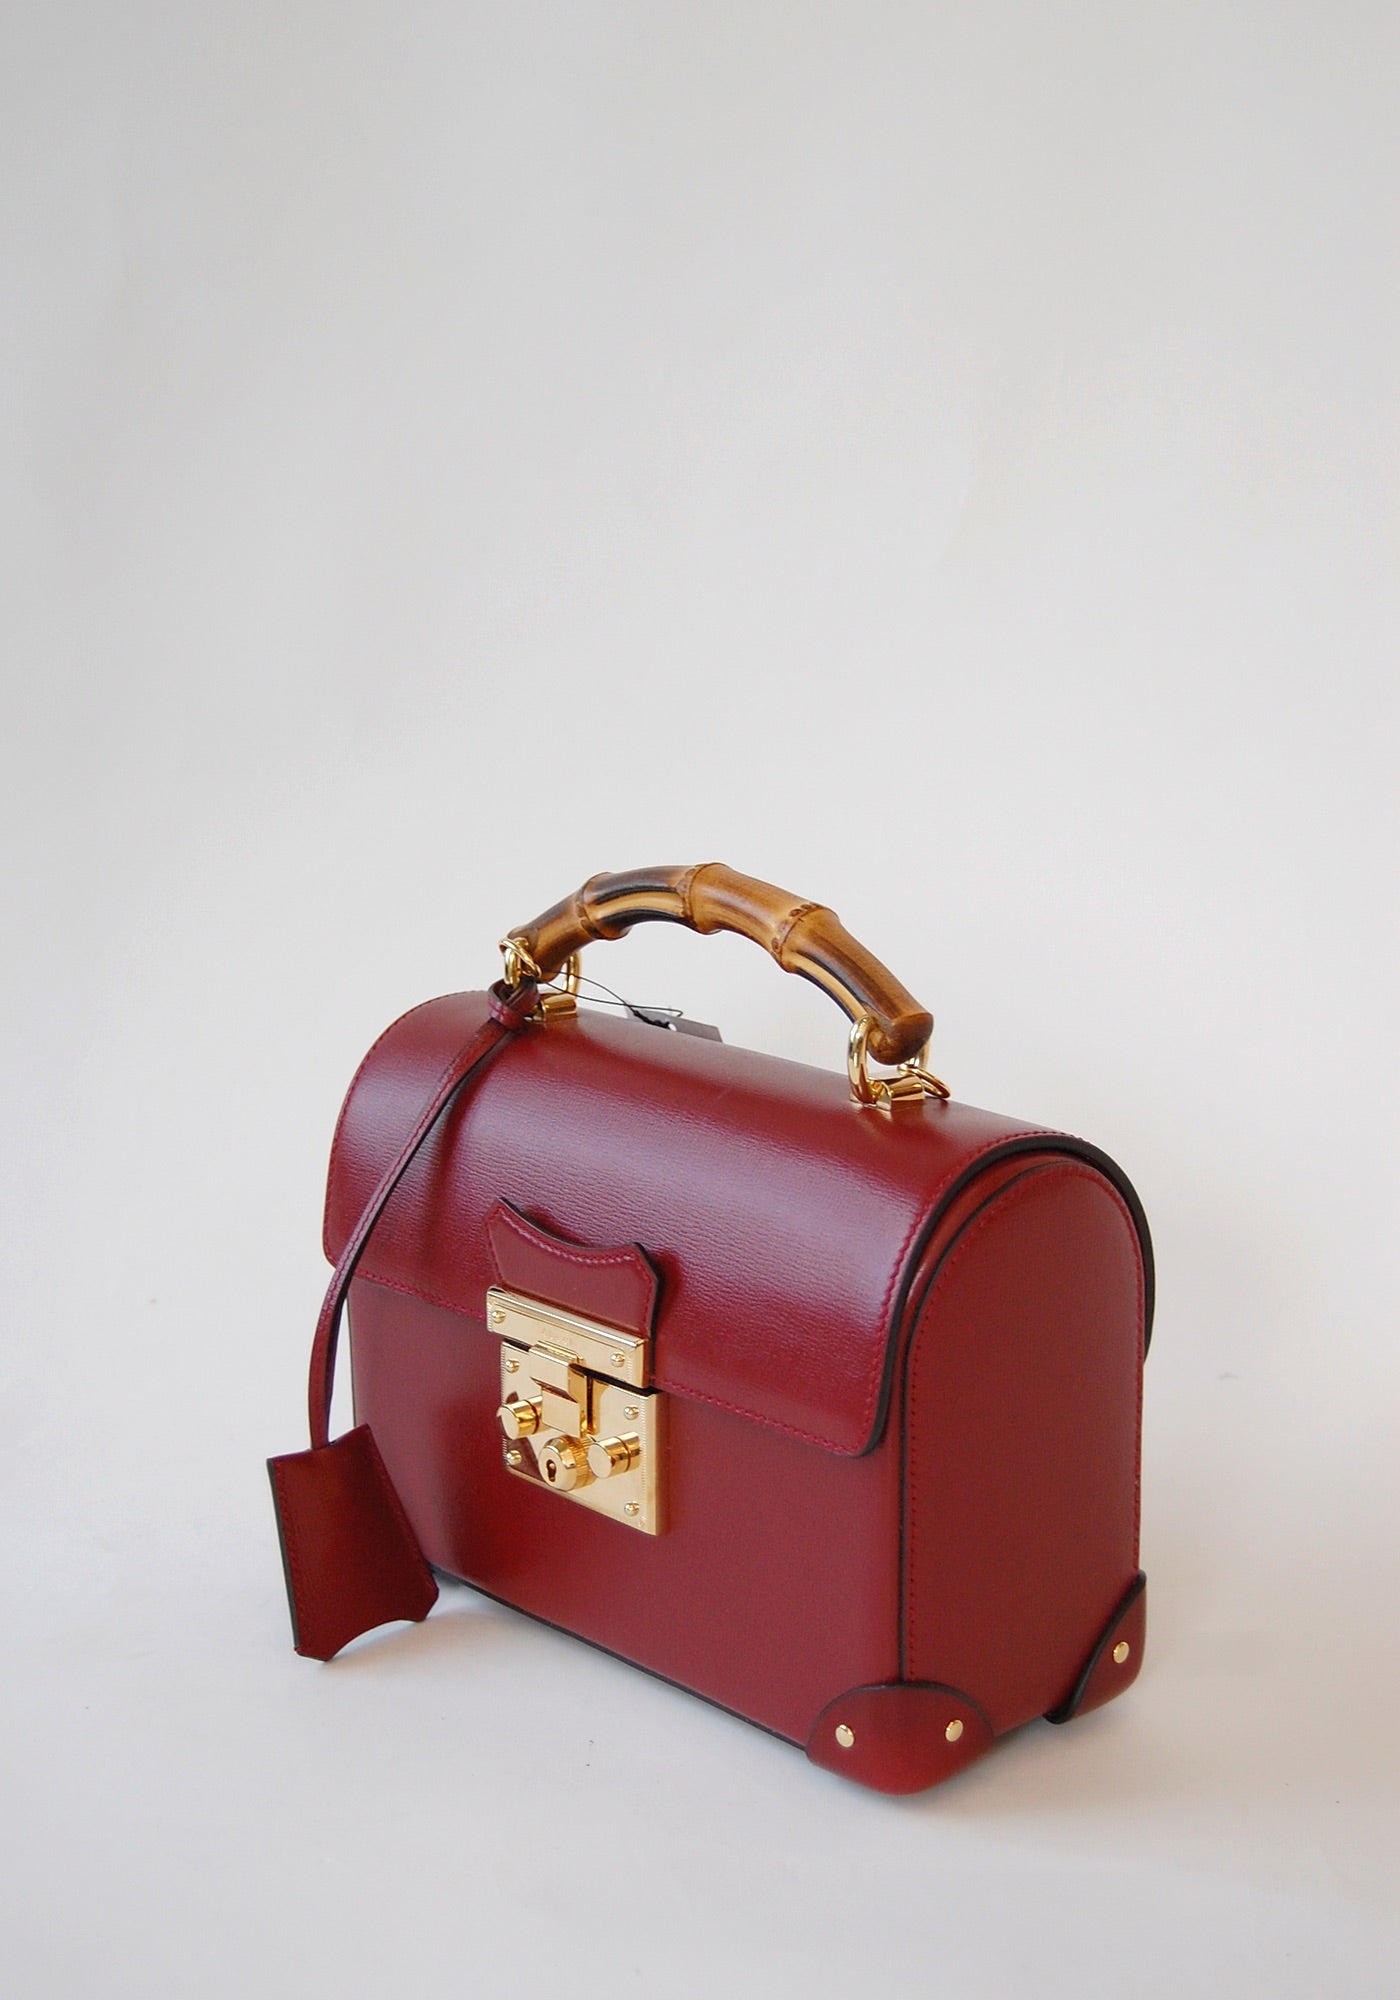 Gucci Red Padlock Handbag